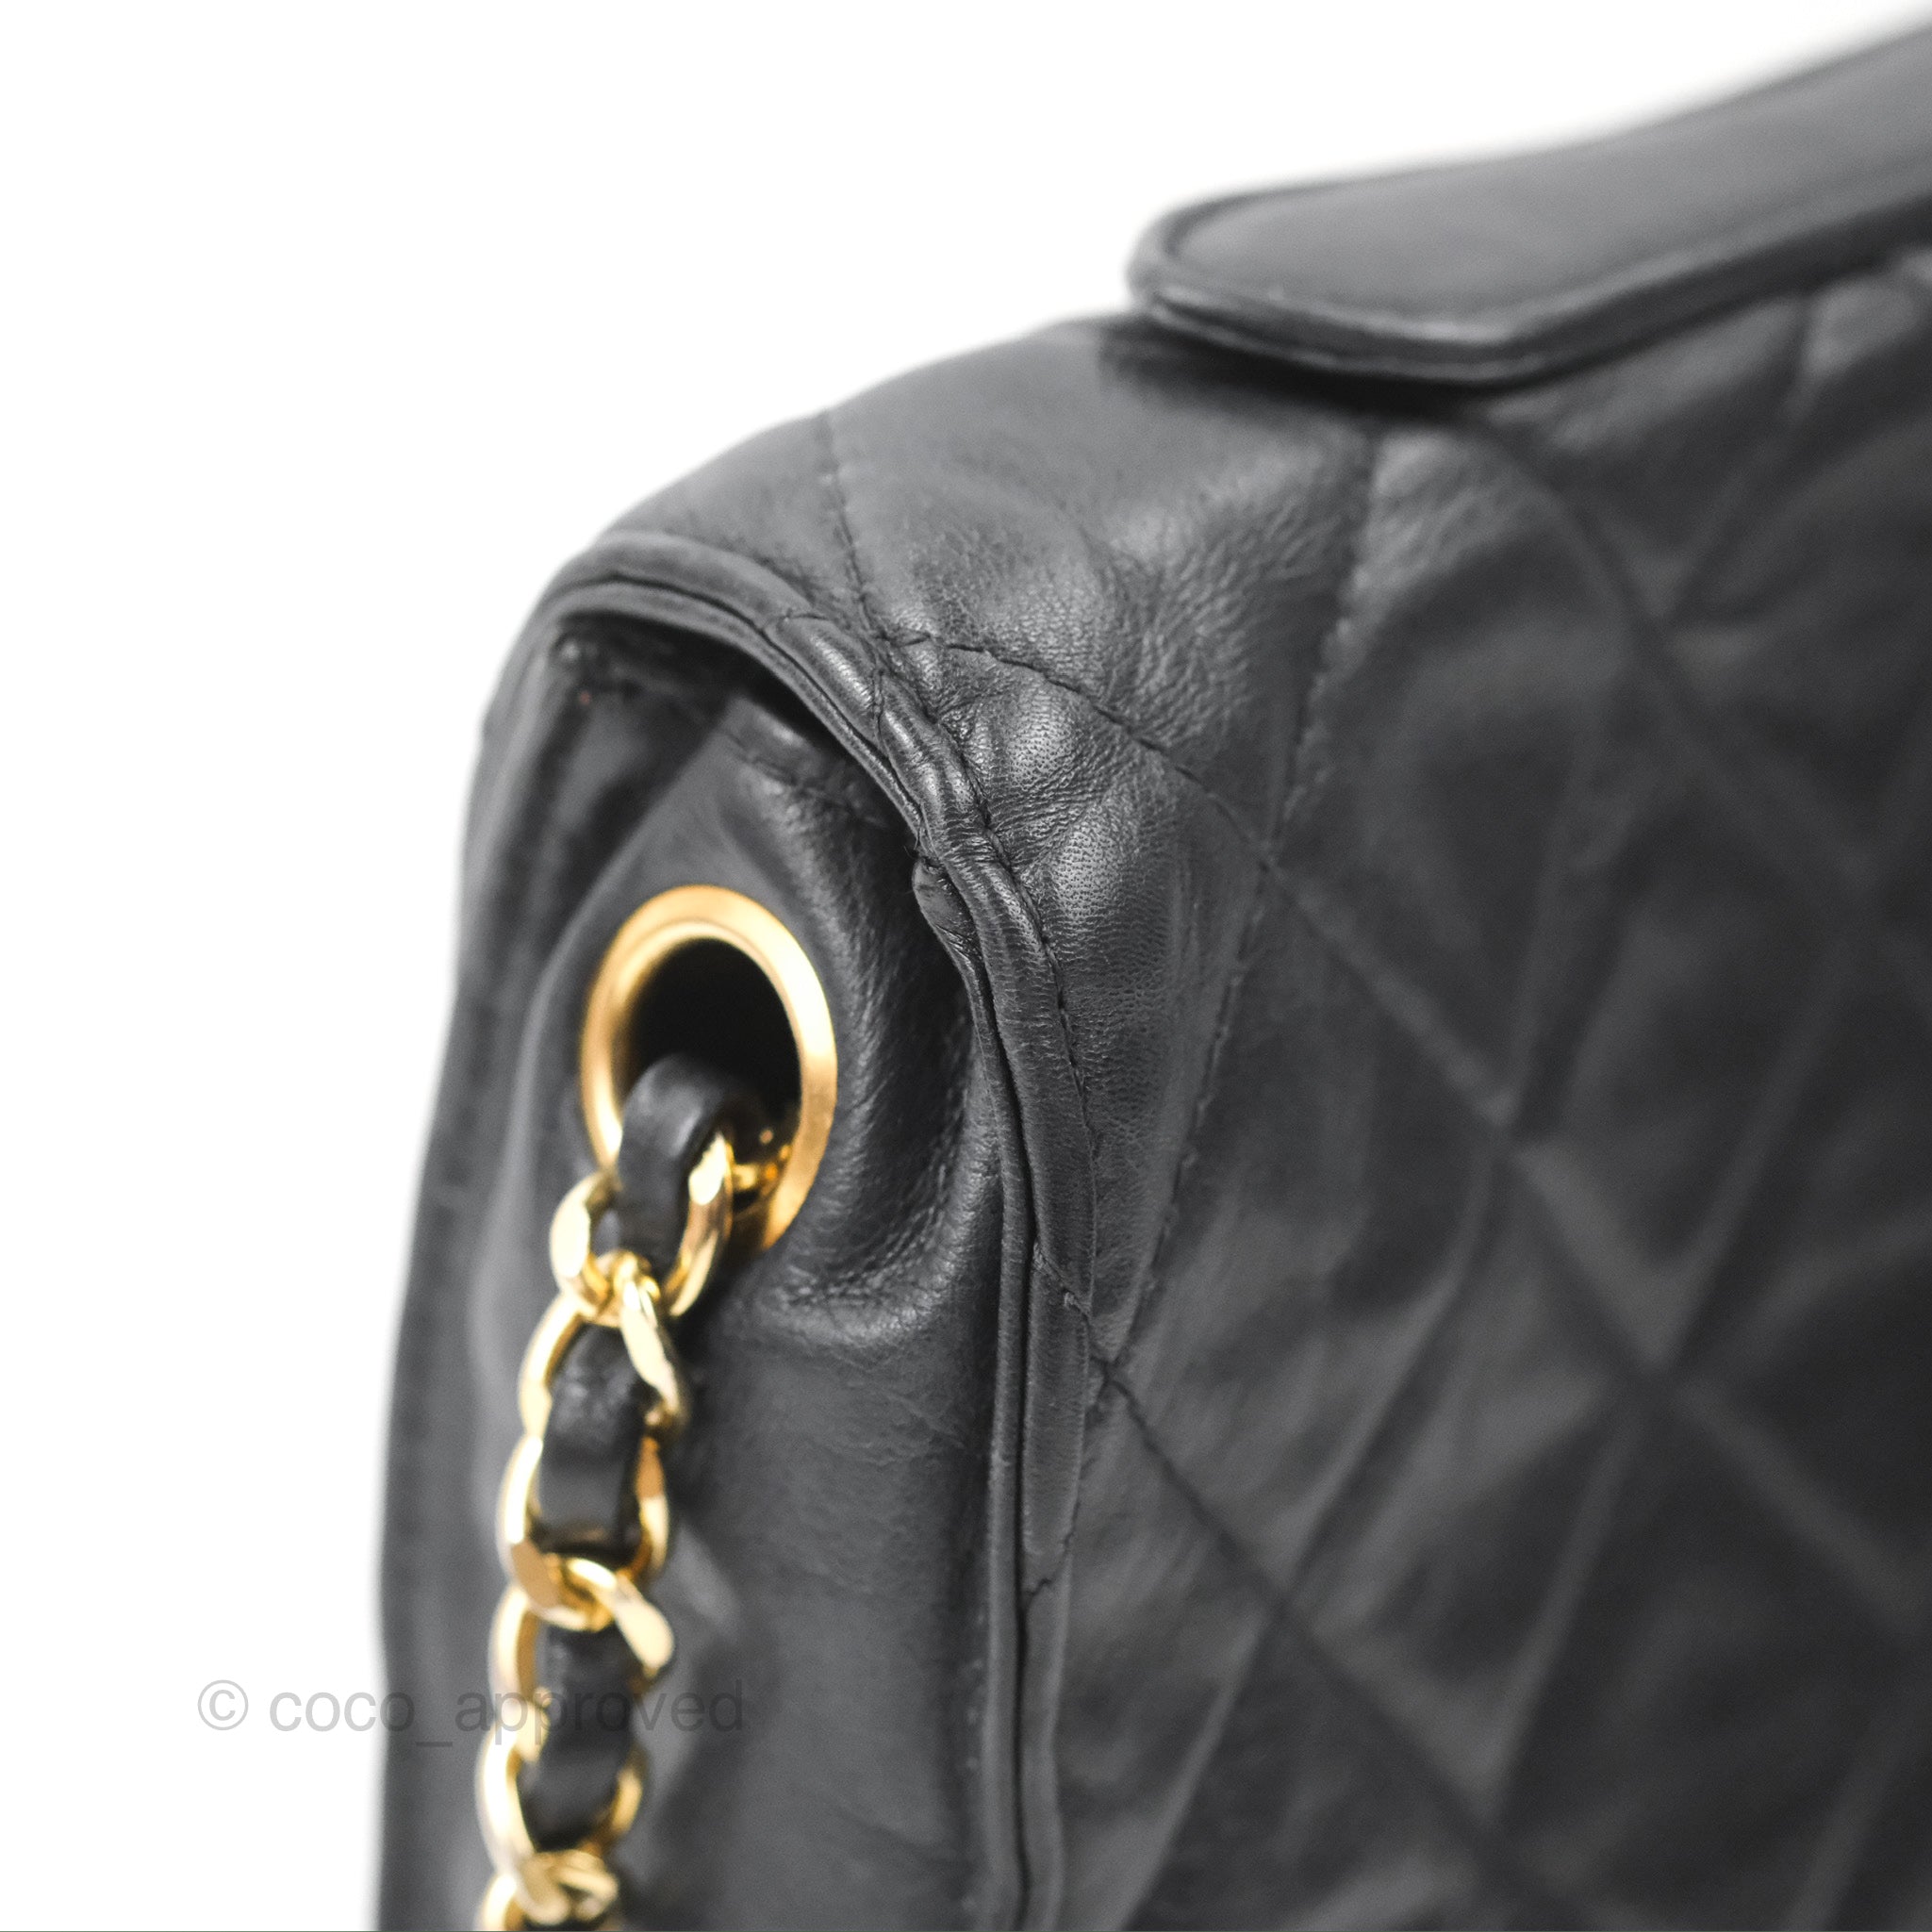 Chanel Chain Shoulder Bag Pochette Purse Beige Caviar 3890779